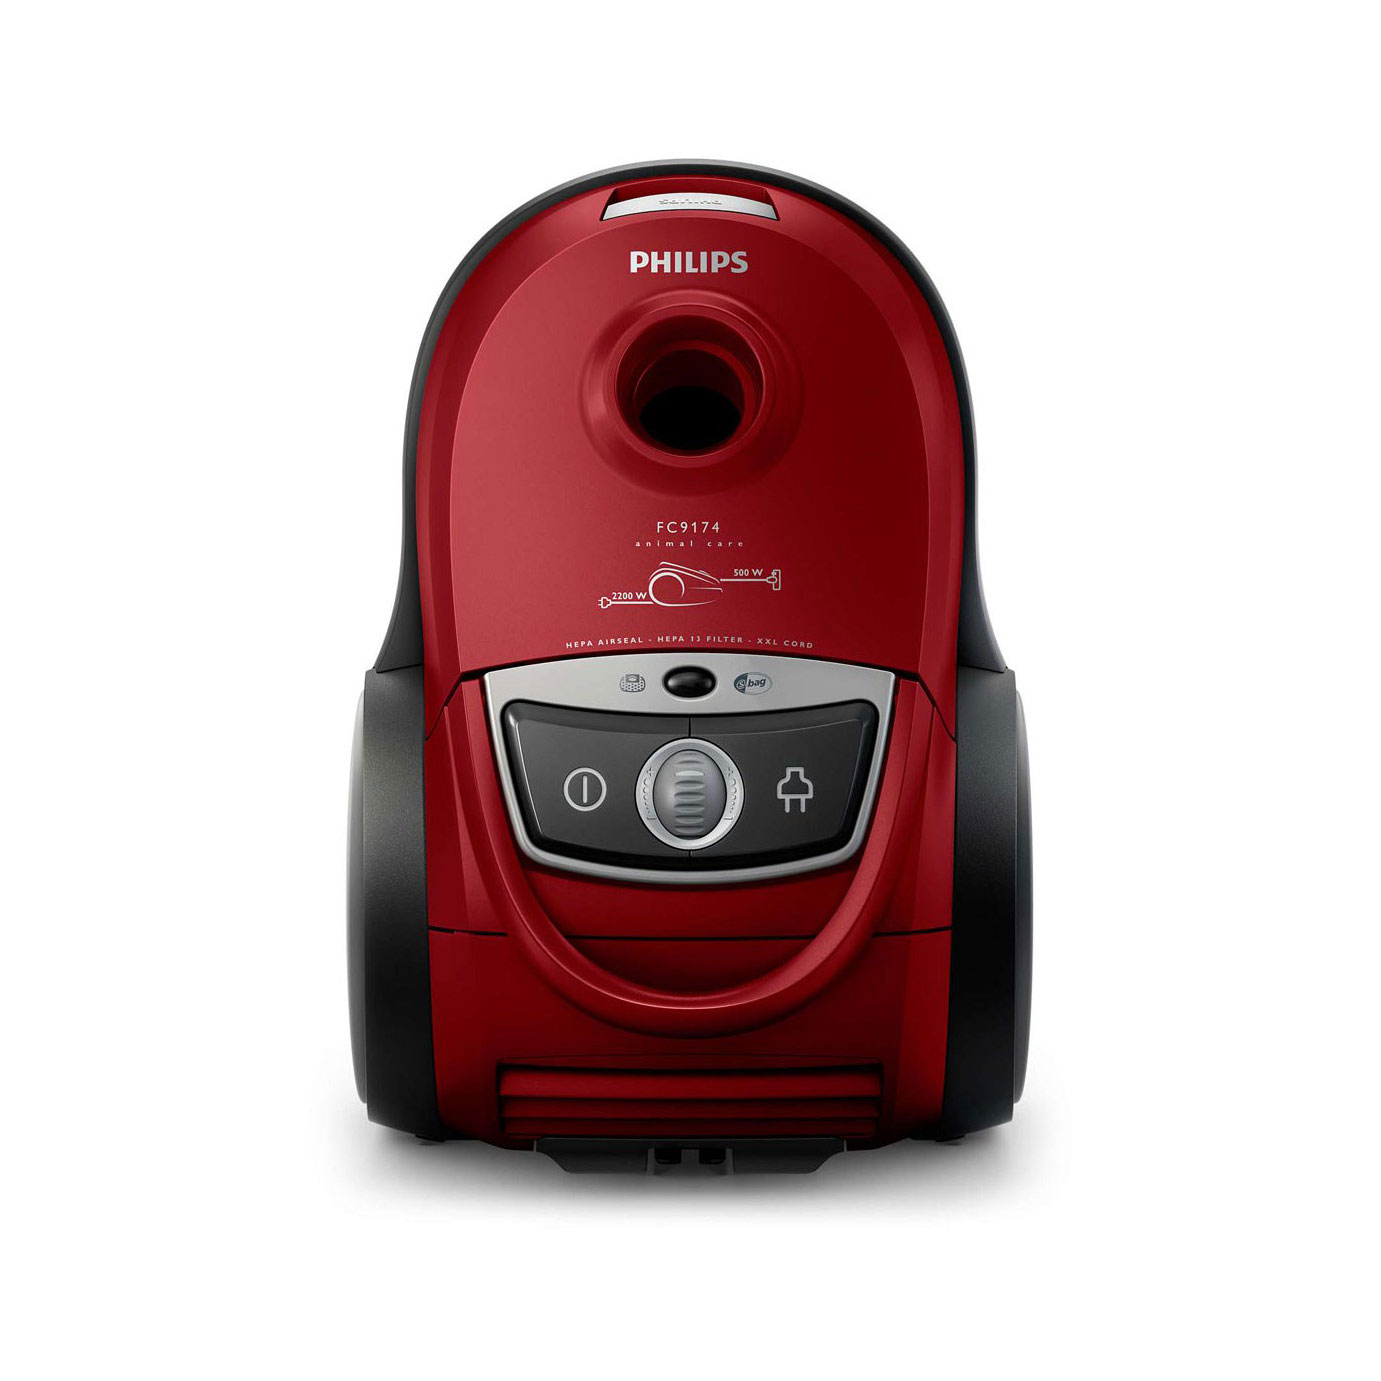 Philips vacuum cleaner model FC9174- Bane Amazon